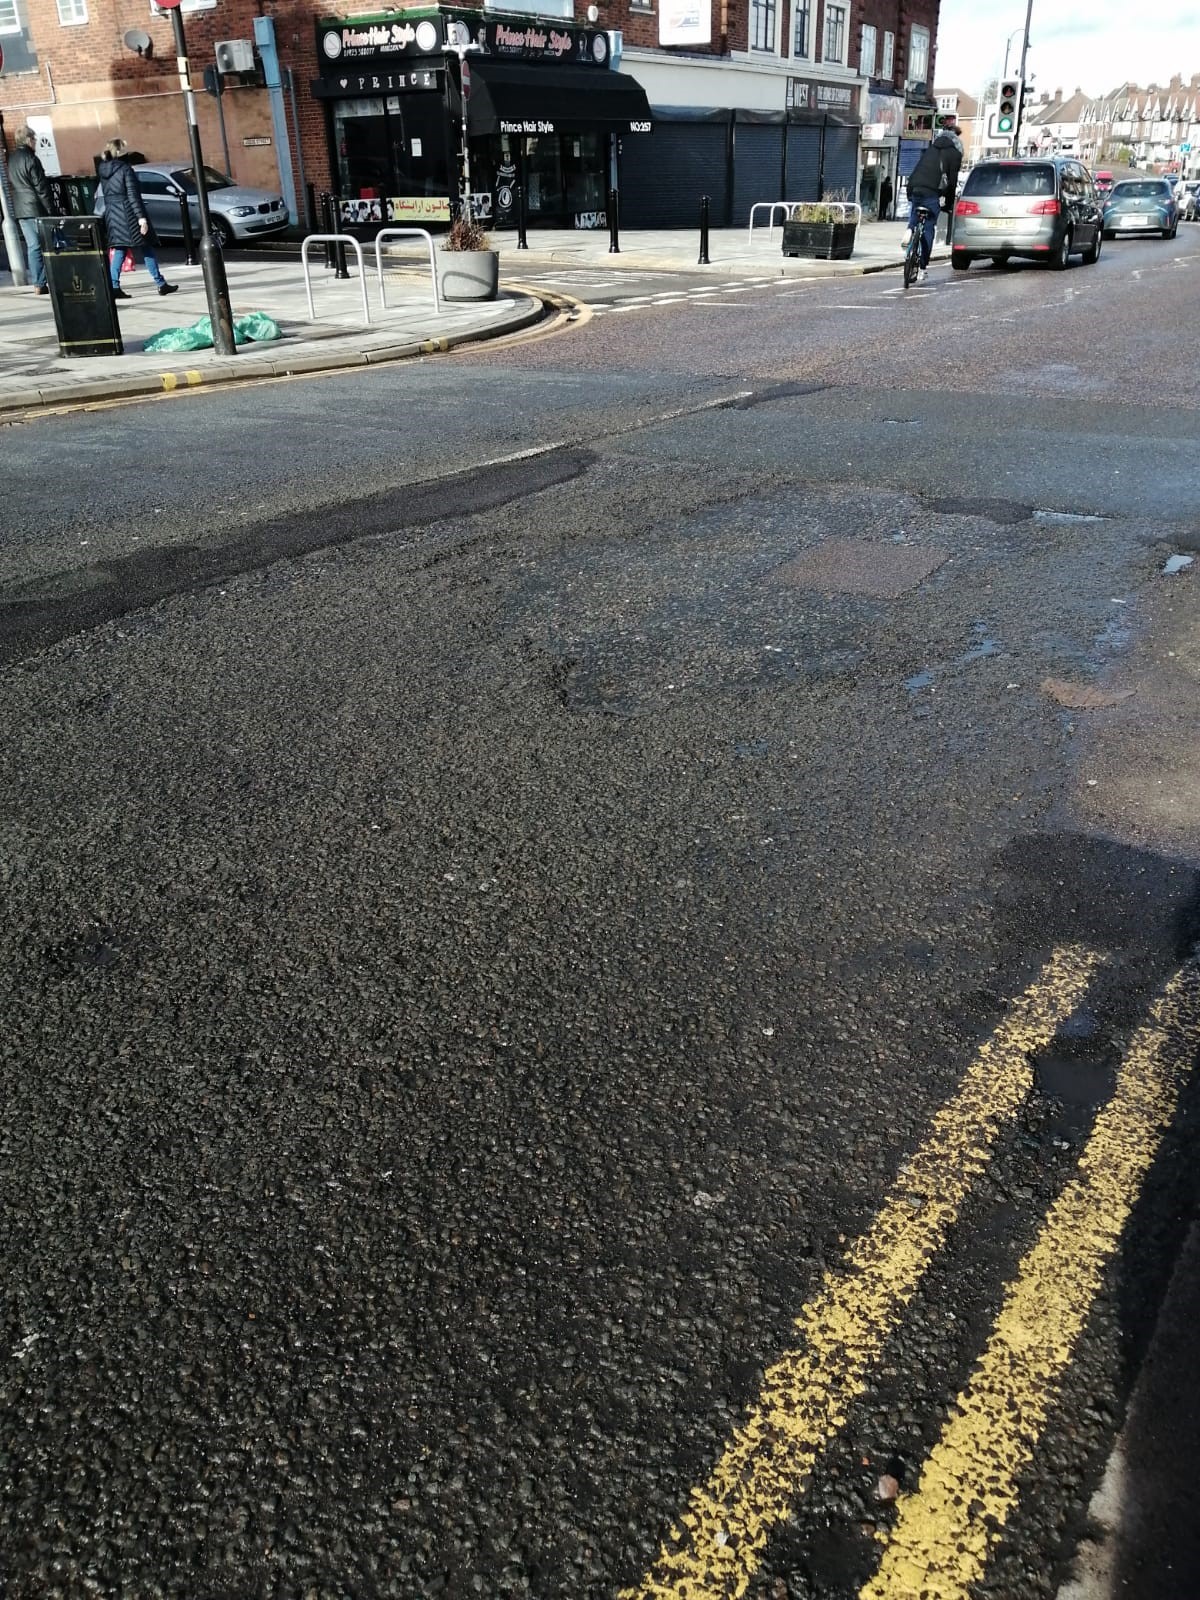 Potholes in St Albans Road. Credit: Cllr Asif Khan